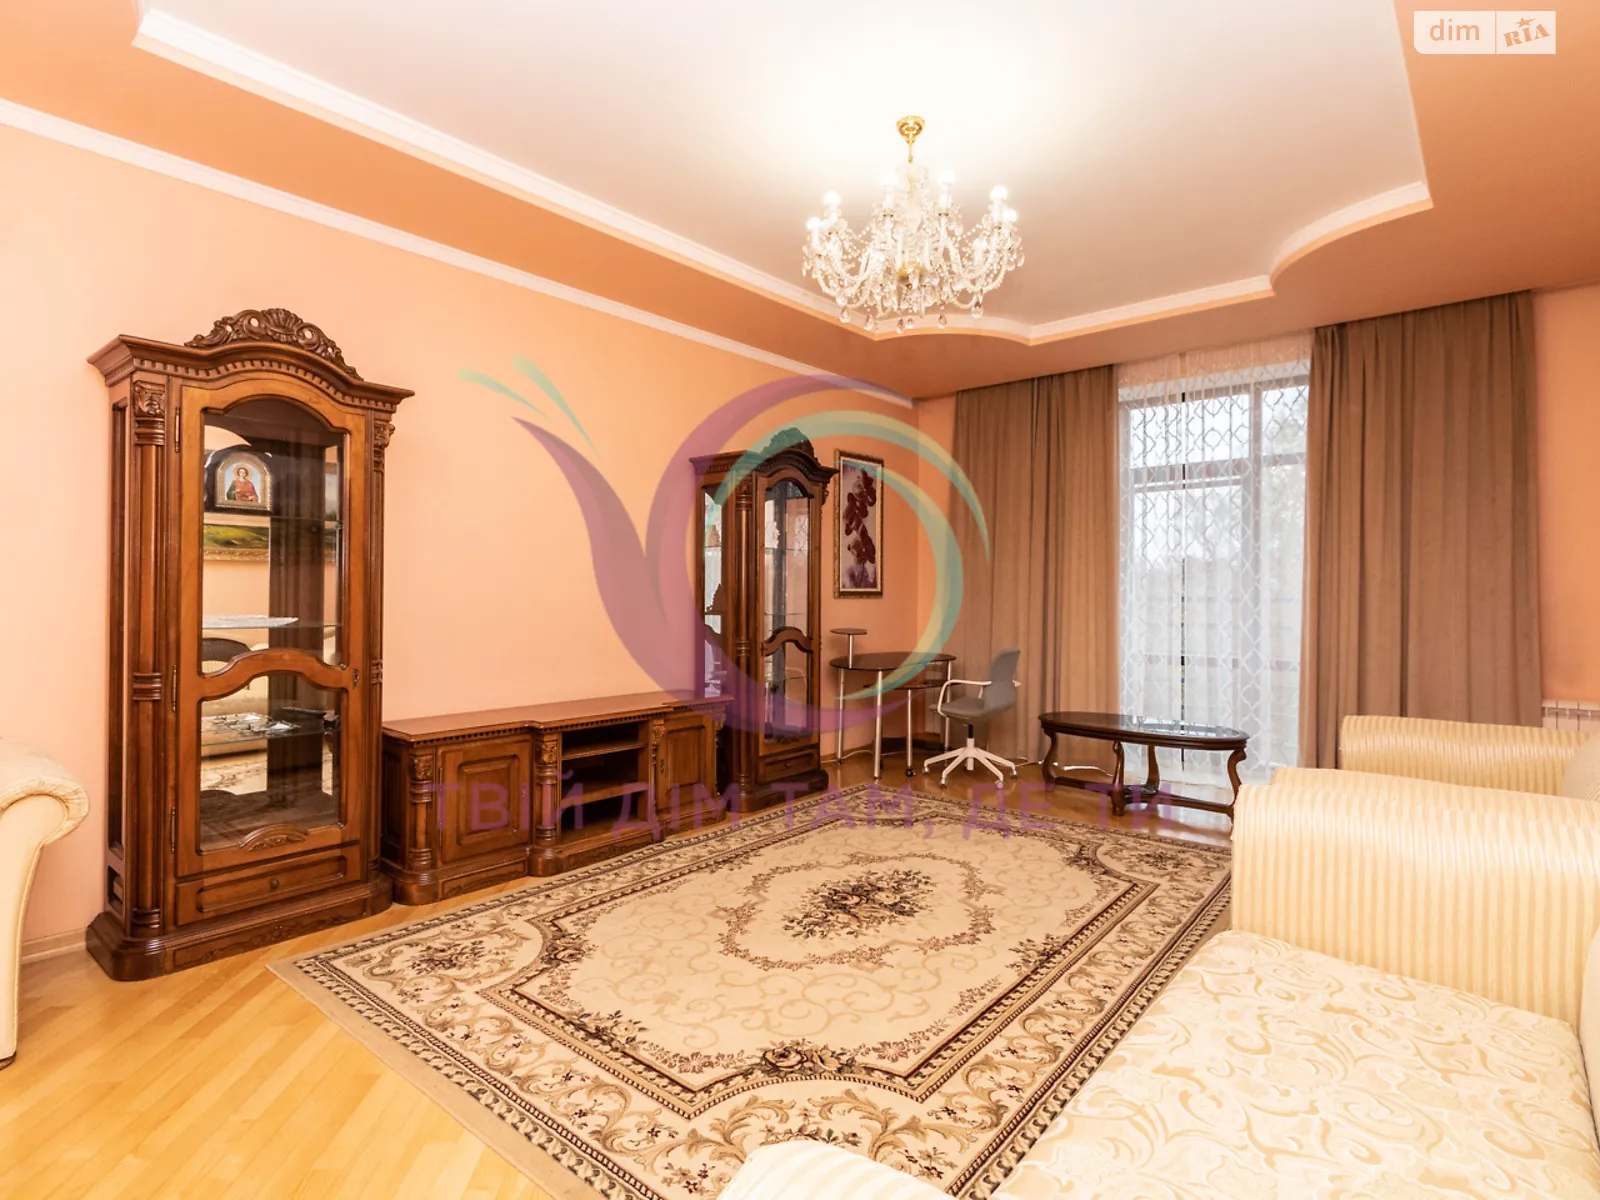 Сдается в аренду 2-комнатная квартира 110 кв. м в Ивано-Франковске - фото 3